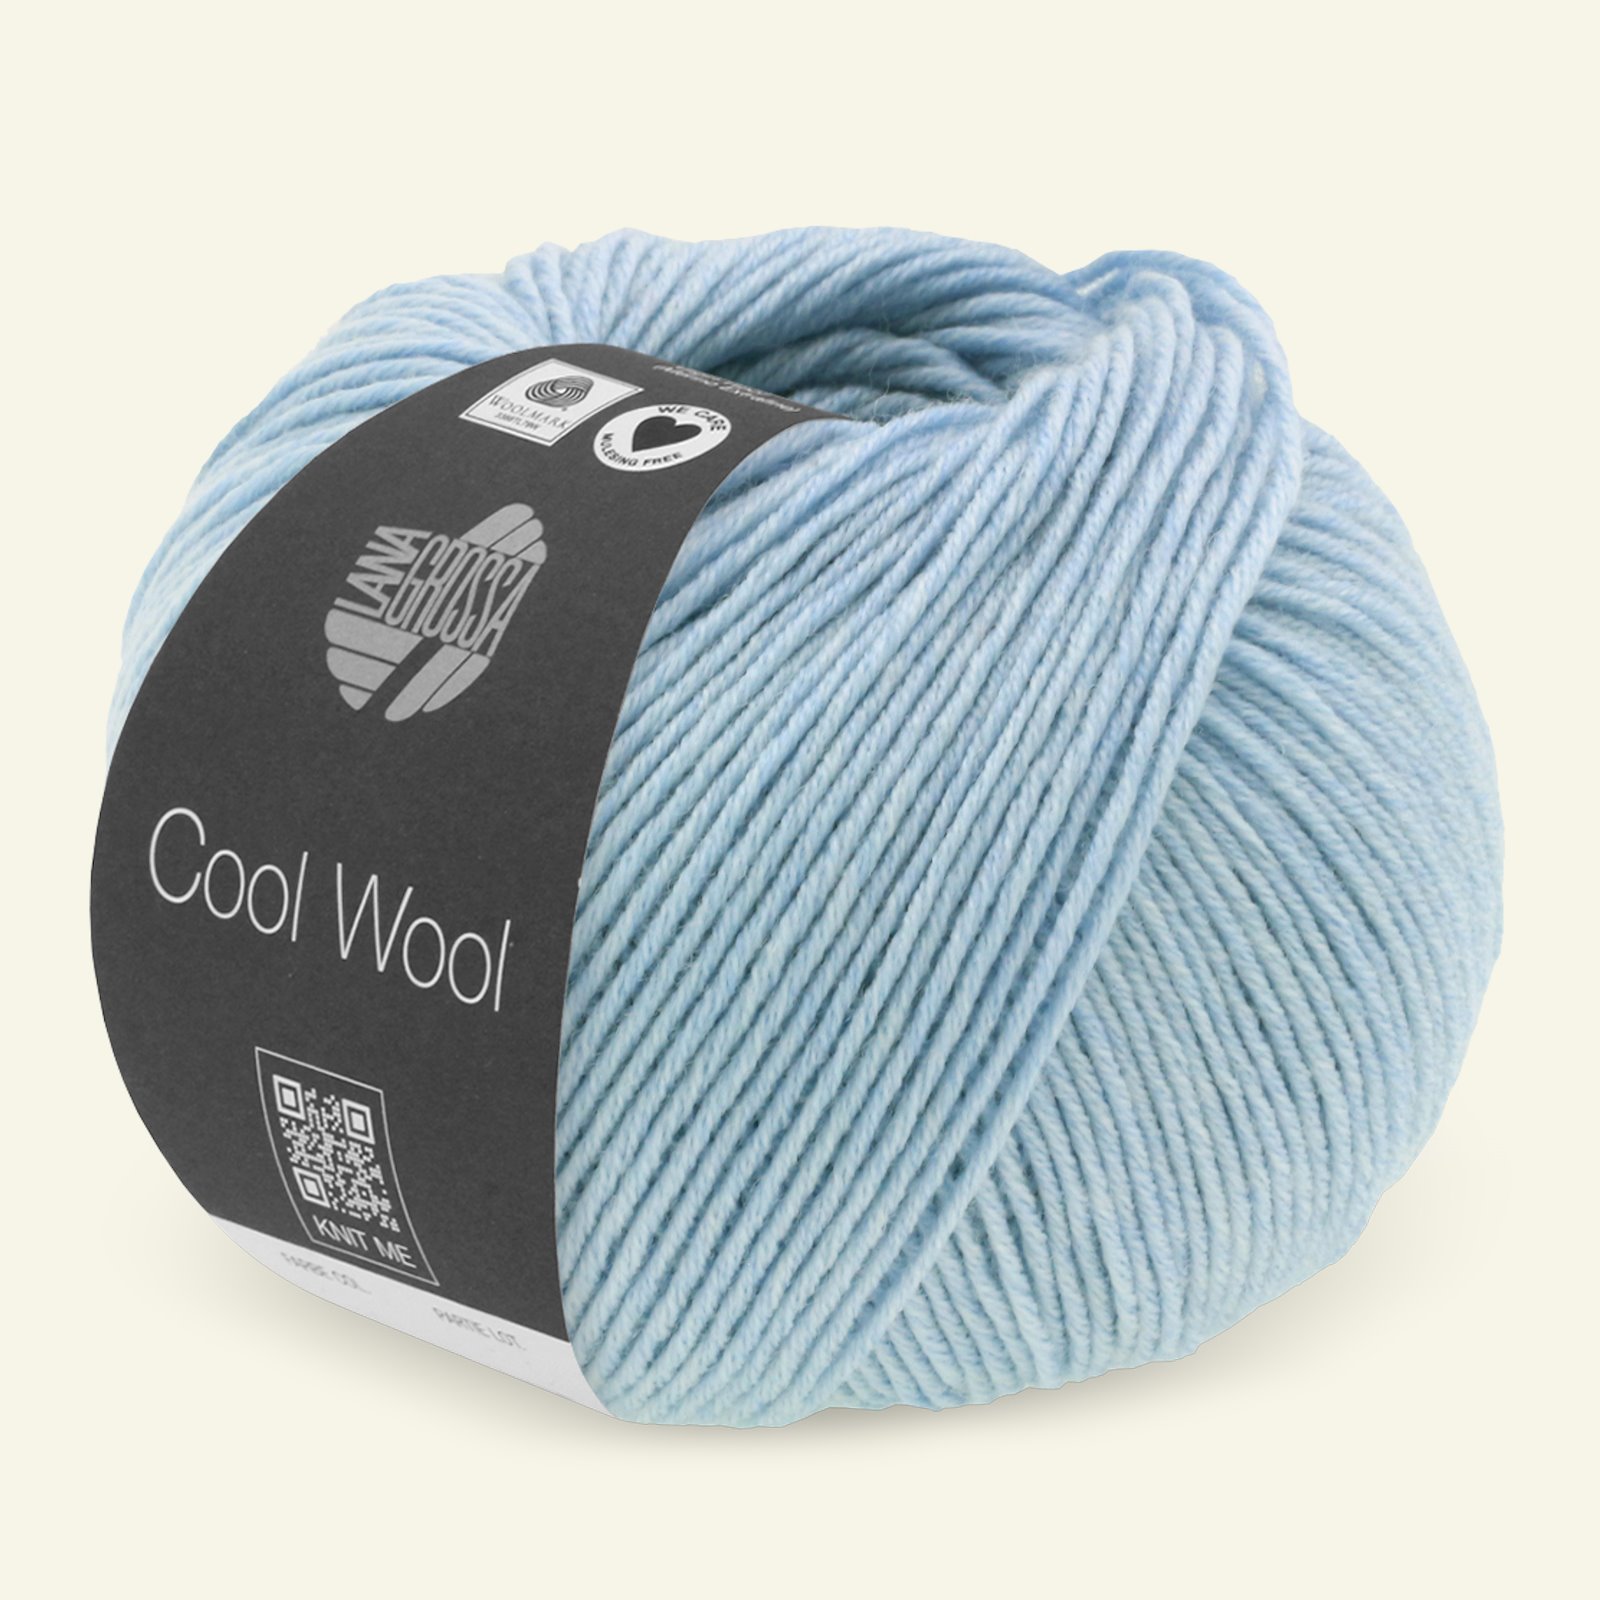 Lana Grossa, extrafine merino wool yarn "Cool Wool", light blue mel. 90001115_pack